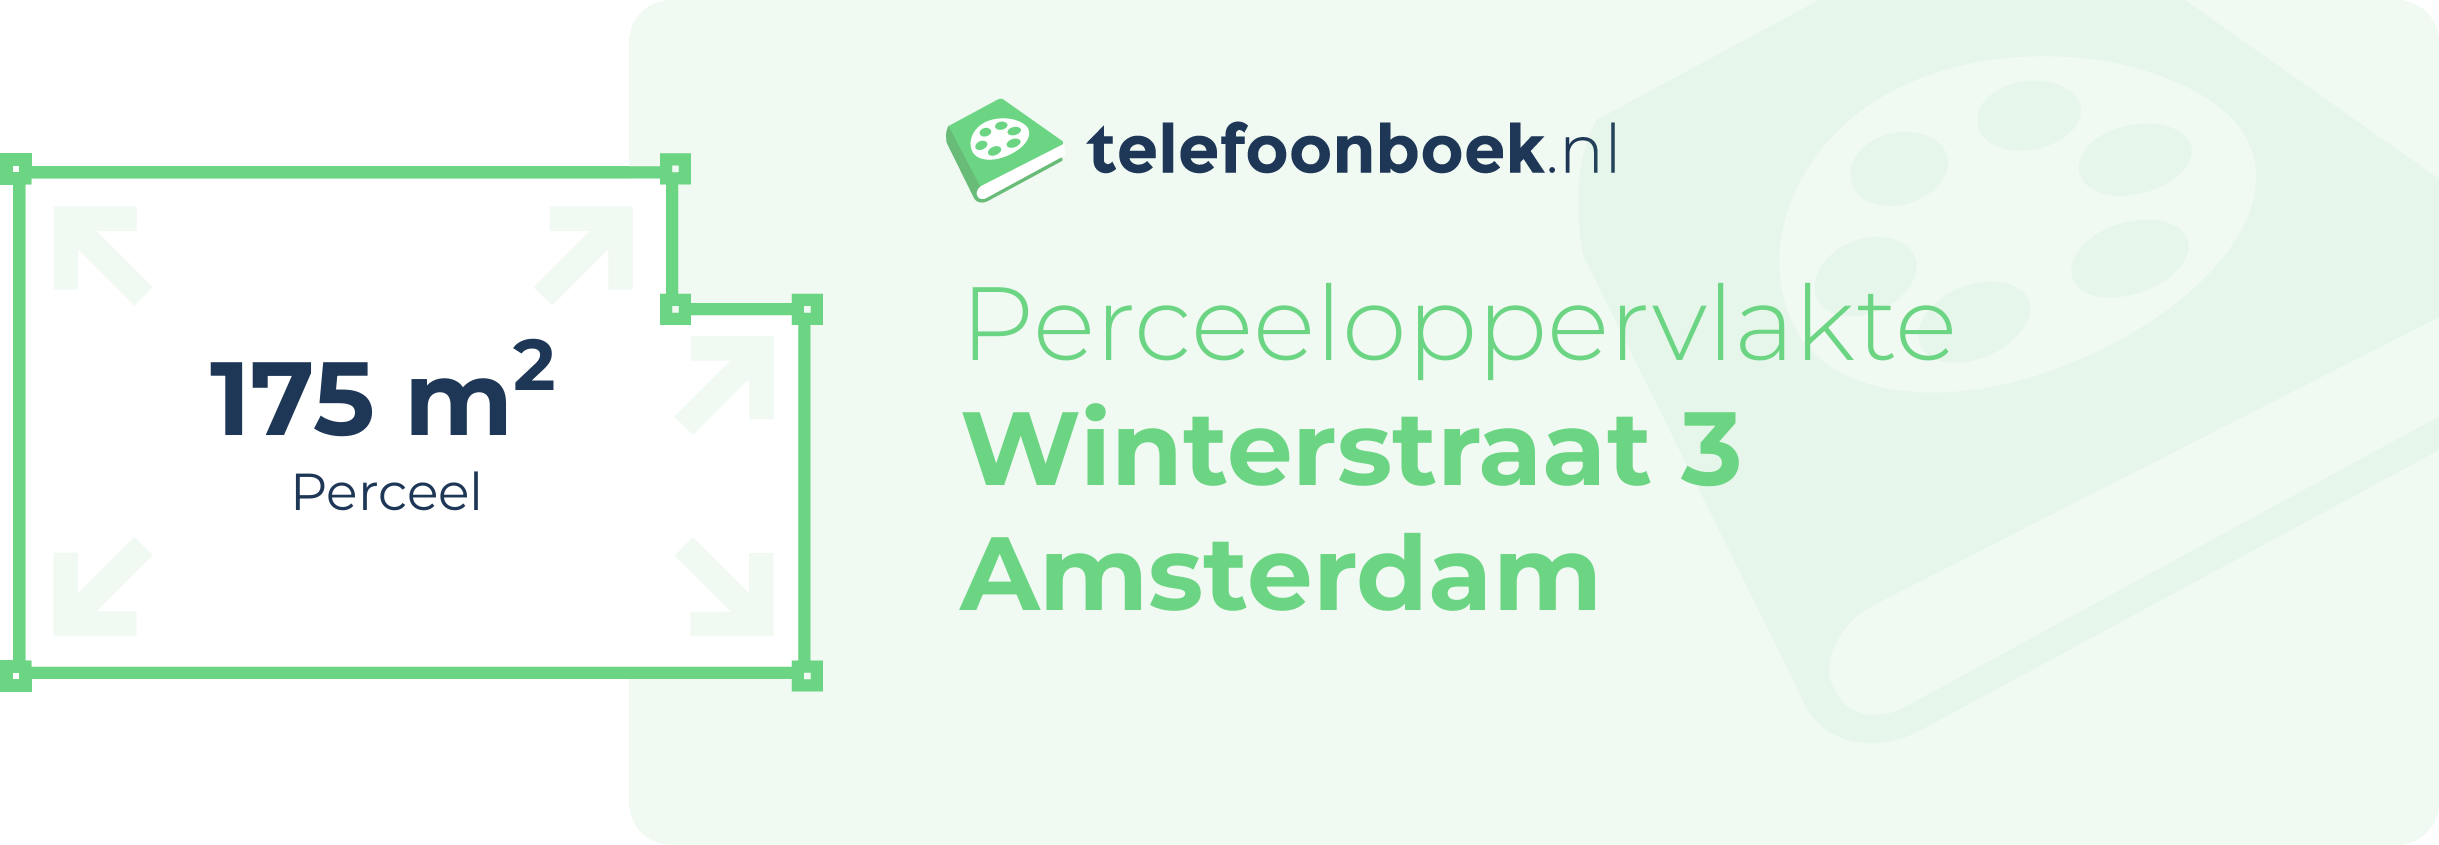 Perceeloppervlakte Winterstraat 3 Amsterdam